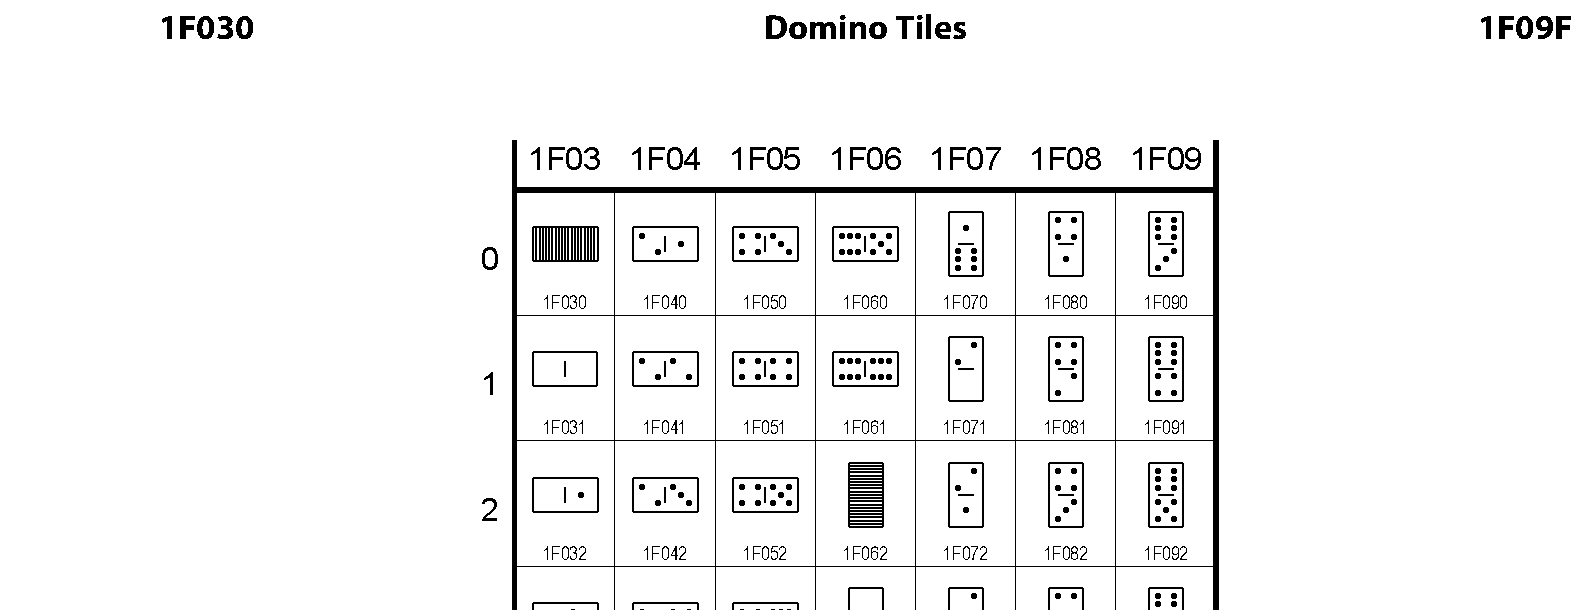 Unicode - Domino Tiles